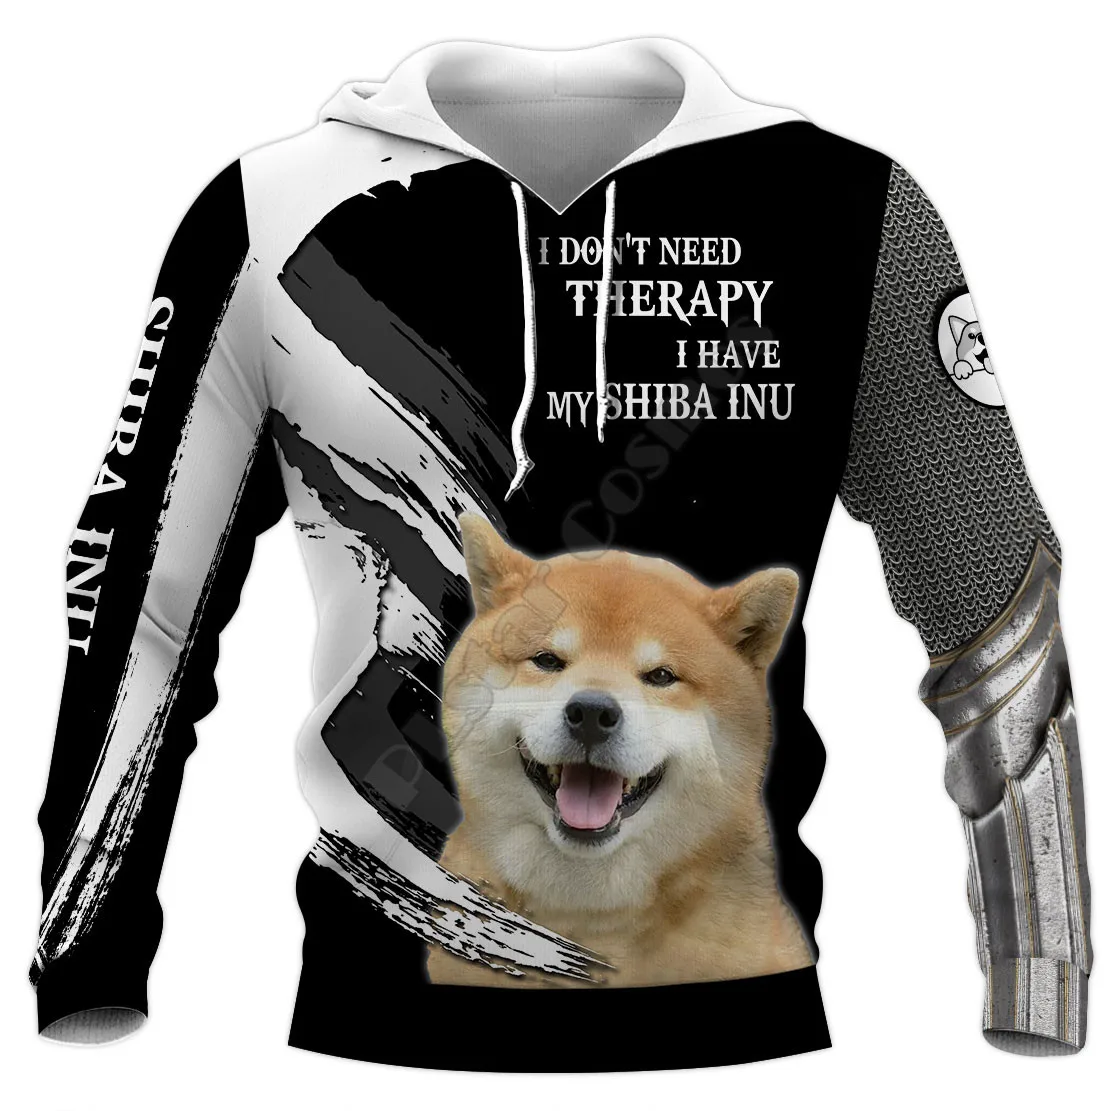 

Knights Templar Shiba Inu 3D Hoodies Printed Pullover Men For Women Funny Sweatshirts Fashion Cosplay Apparel Sweater 02